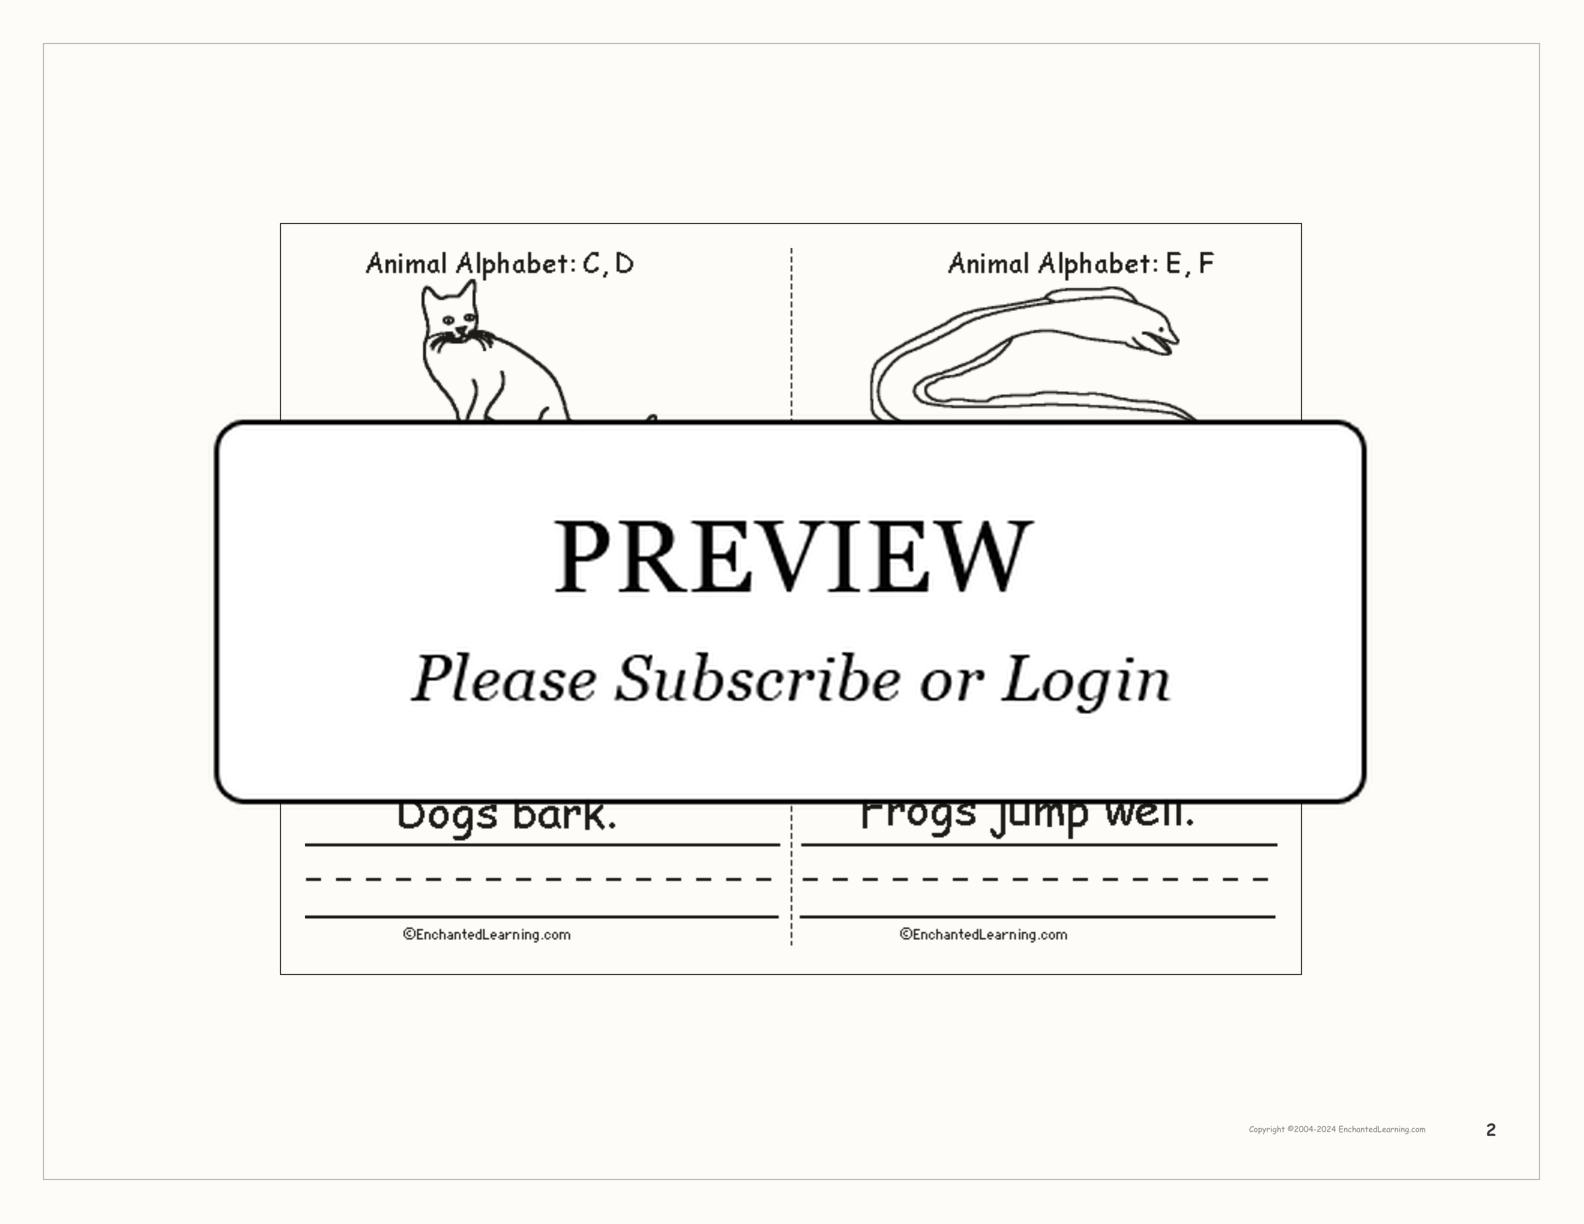 Animal Alphabet Book interactive printout page 2